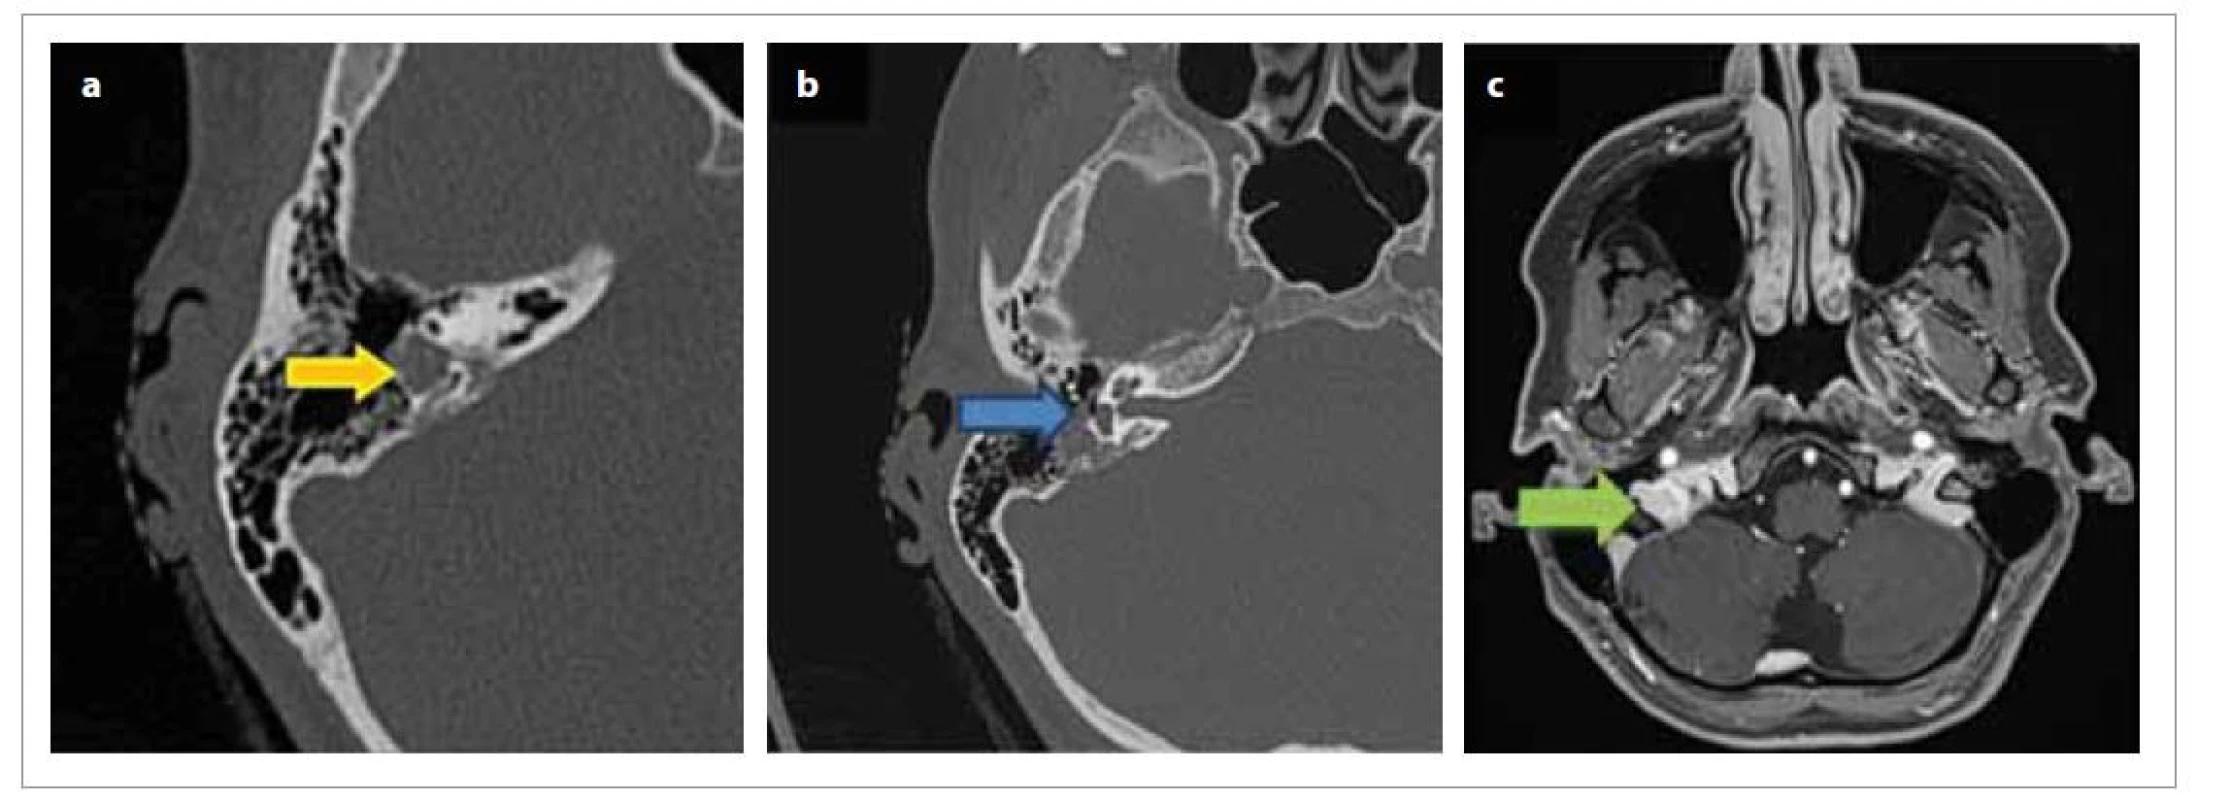 HRCT zobrazenie tumoru: a) tumor labyrintu vnútorného ucha (žltá šípka označuje tumor),
b) uzurácia vestibula a zavzatie n. VII (modrá šípka), c) MR obraz tumoru (zelená šípka).<br>
Fig. 2. HRCT tumor imaging: a) inner ear labyrinth tumor (yellow arrow indicates tumor), b) vestibular occlusion and n. VII uptake
(blue arrow), c) MR image of tumor (green arrow).